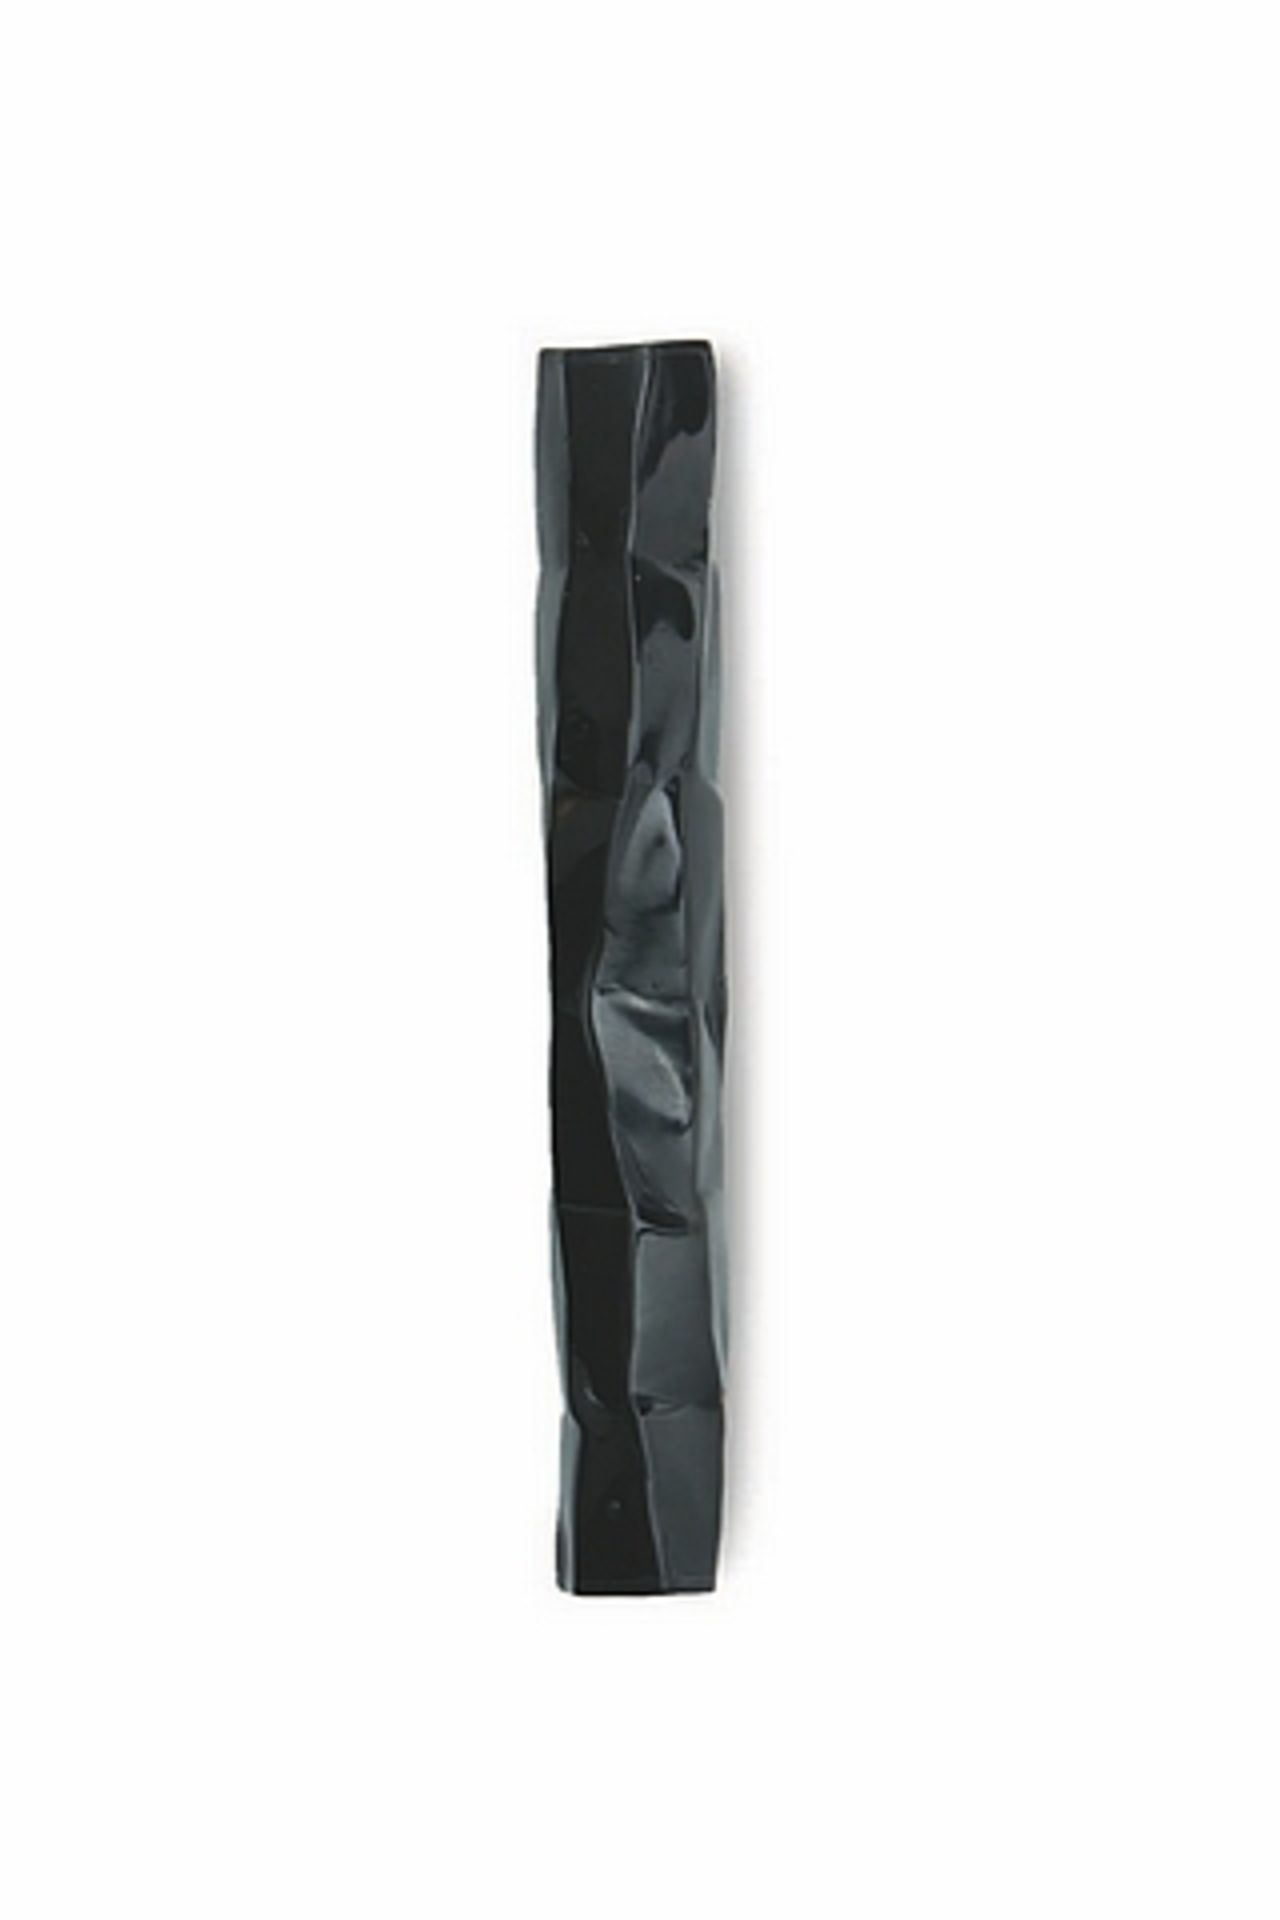 Handle clinch black tab shell polished 20x2.5cm Cravt SKU 398312